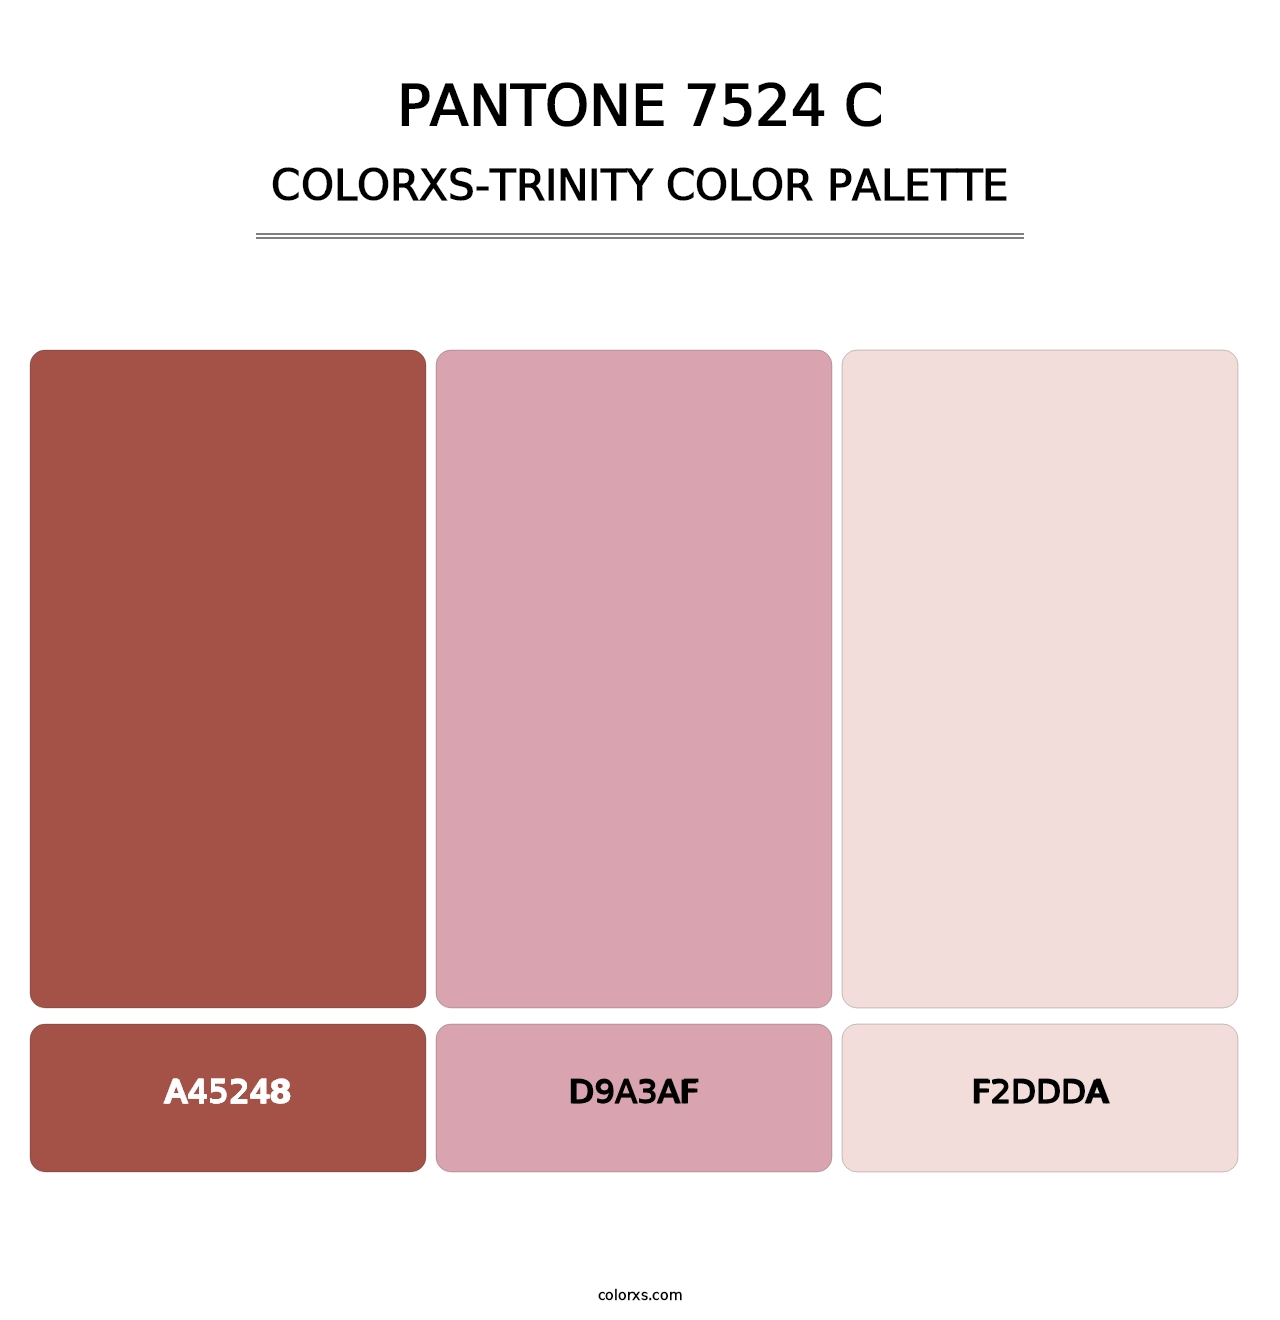 PANTONE 7524 C - Colorxs Trinity Palette